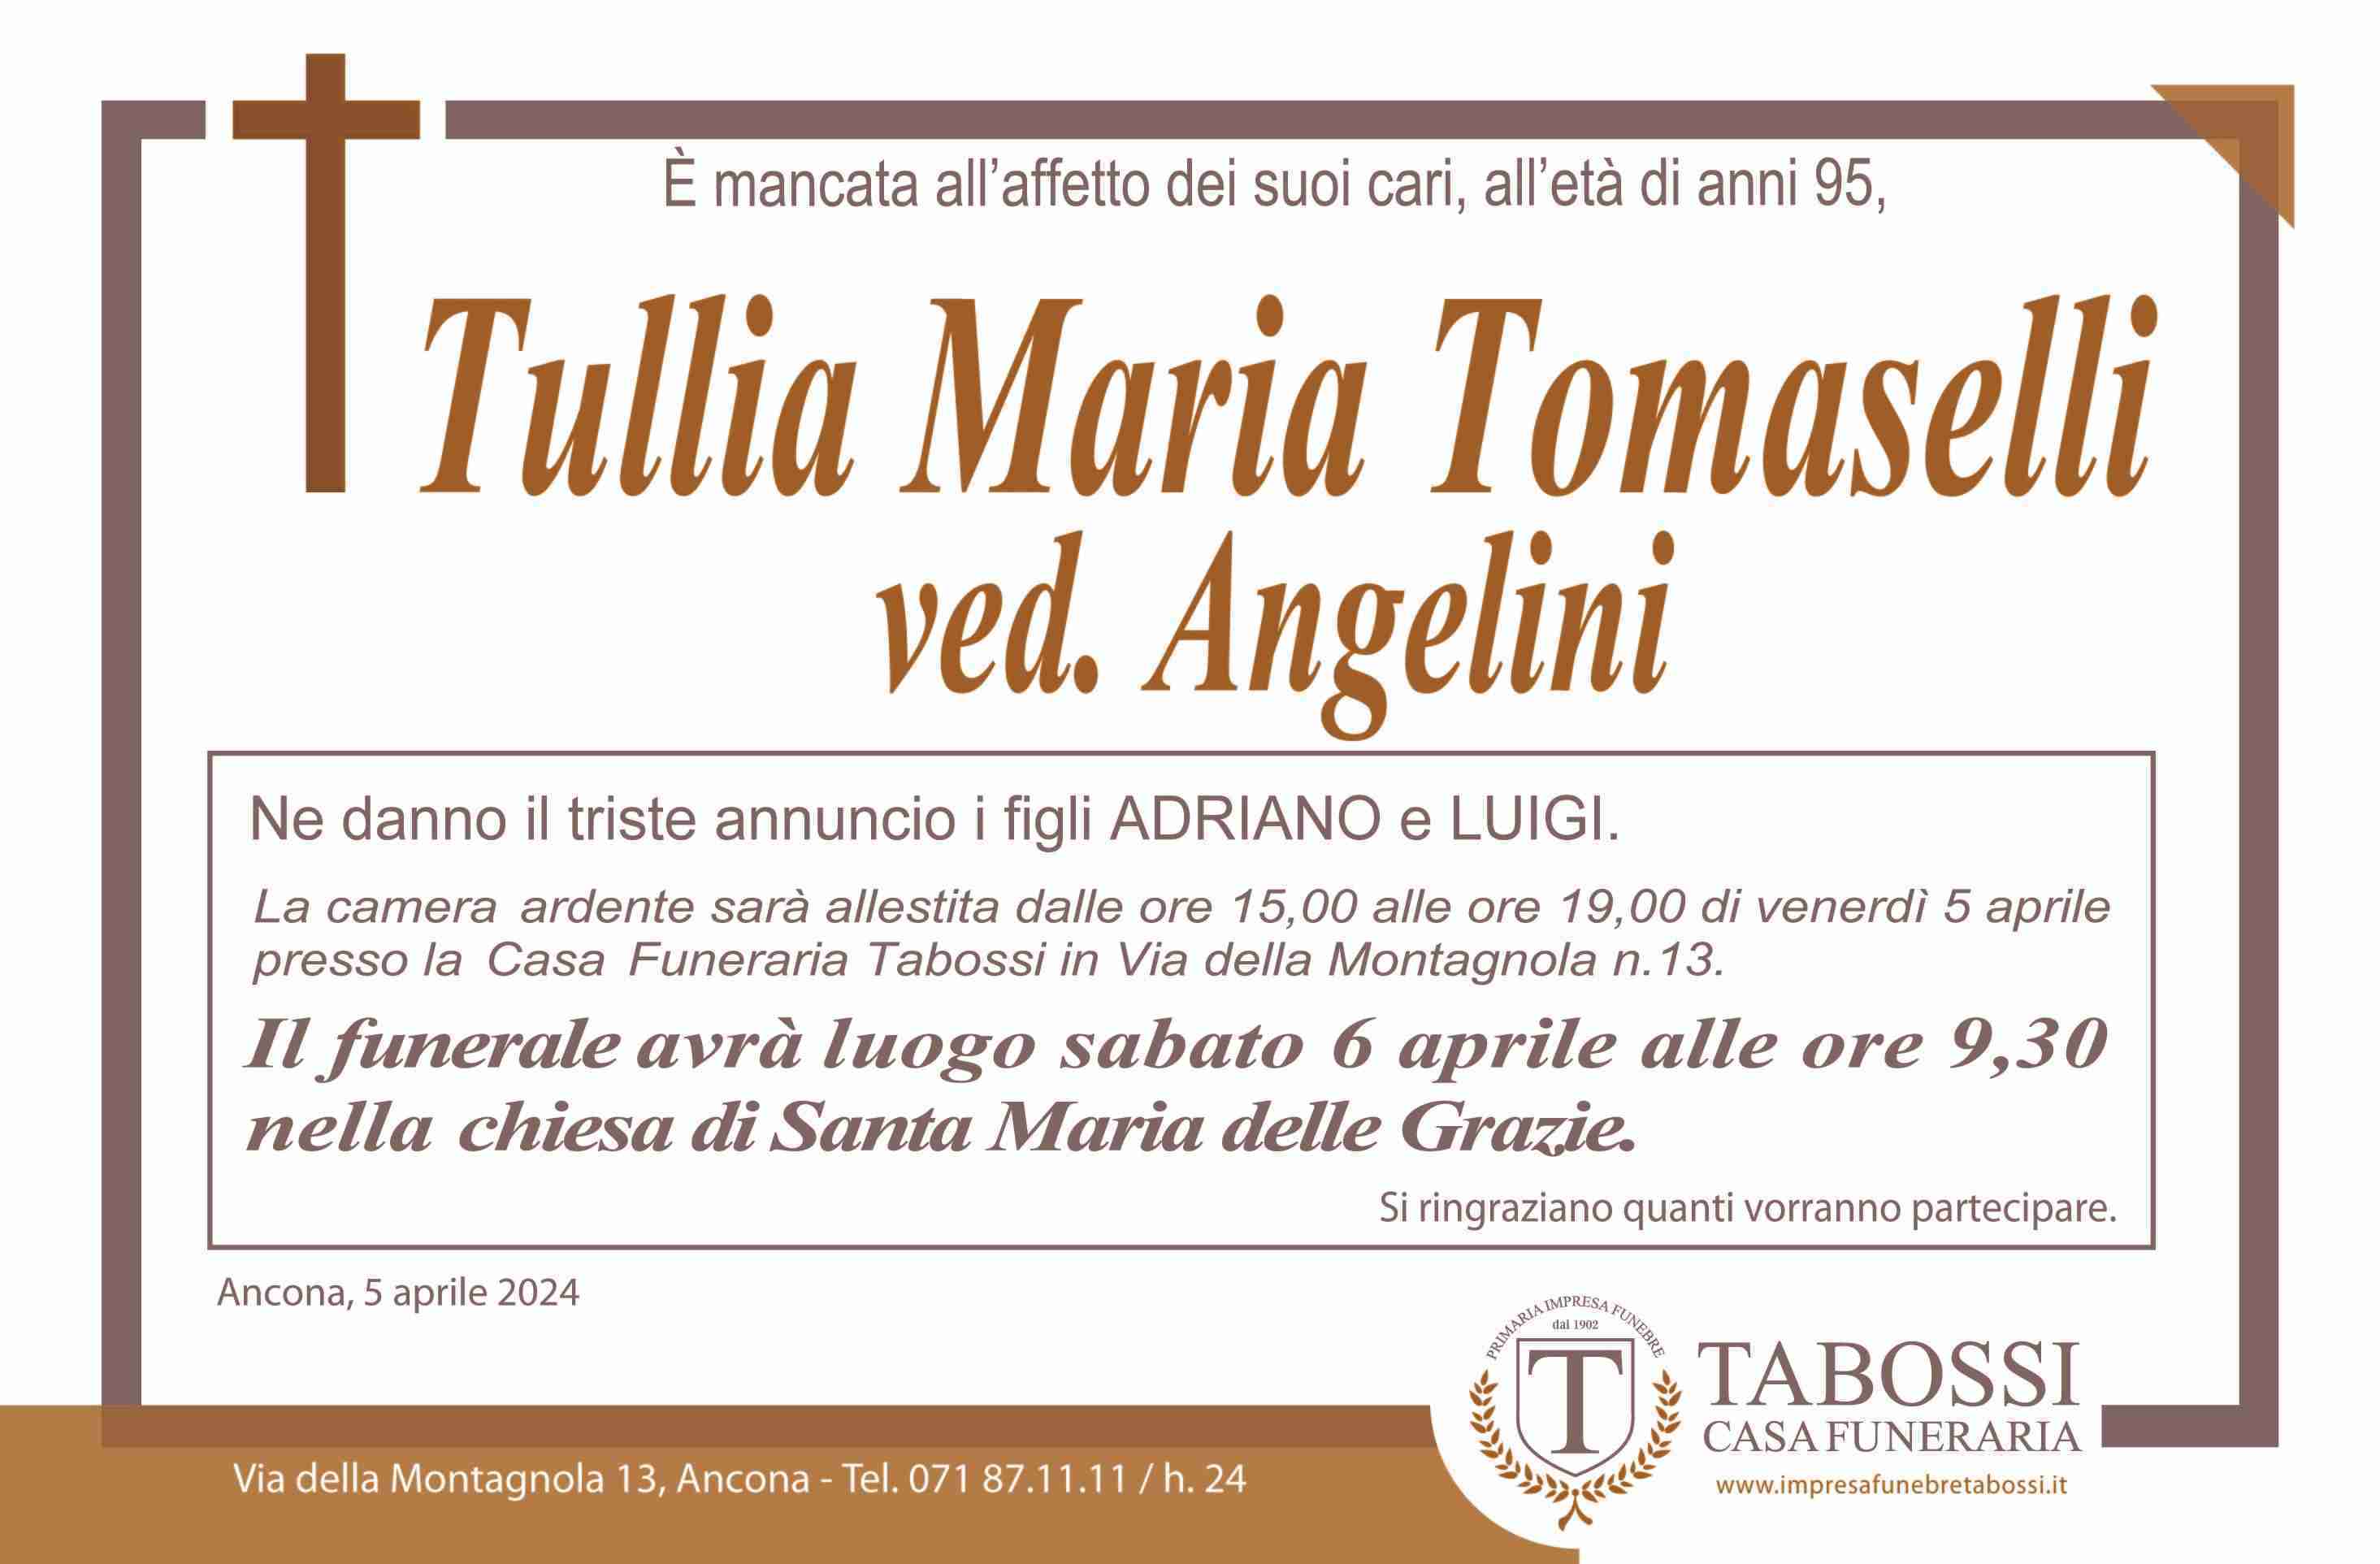 Tullia Maria Tomaselli